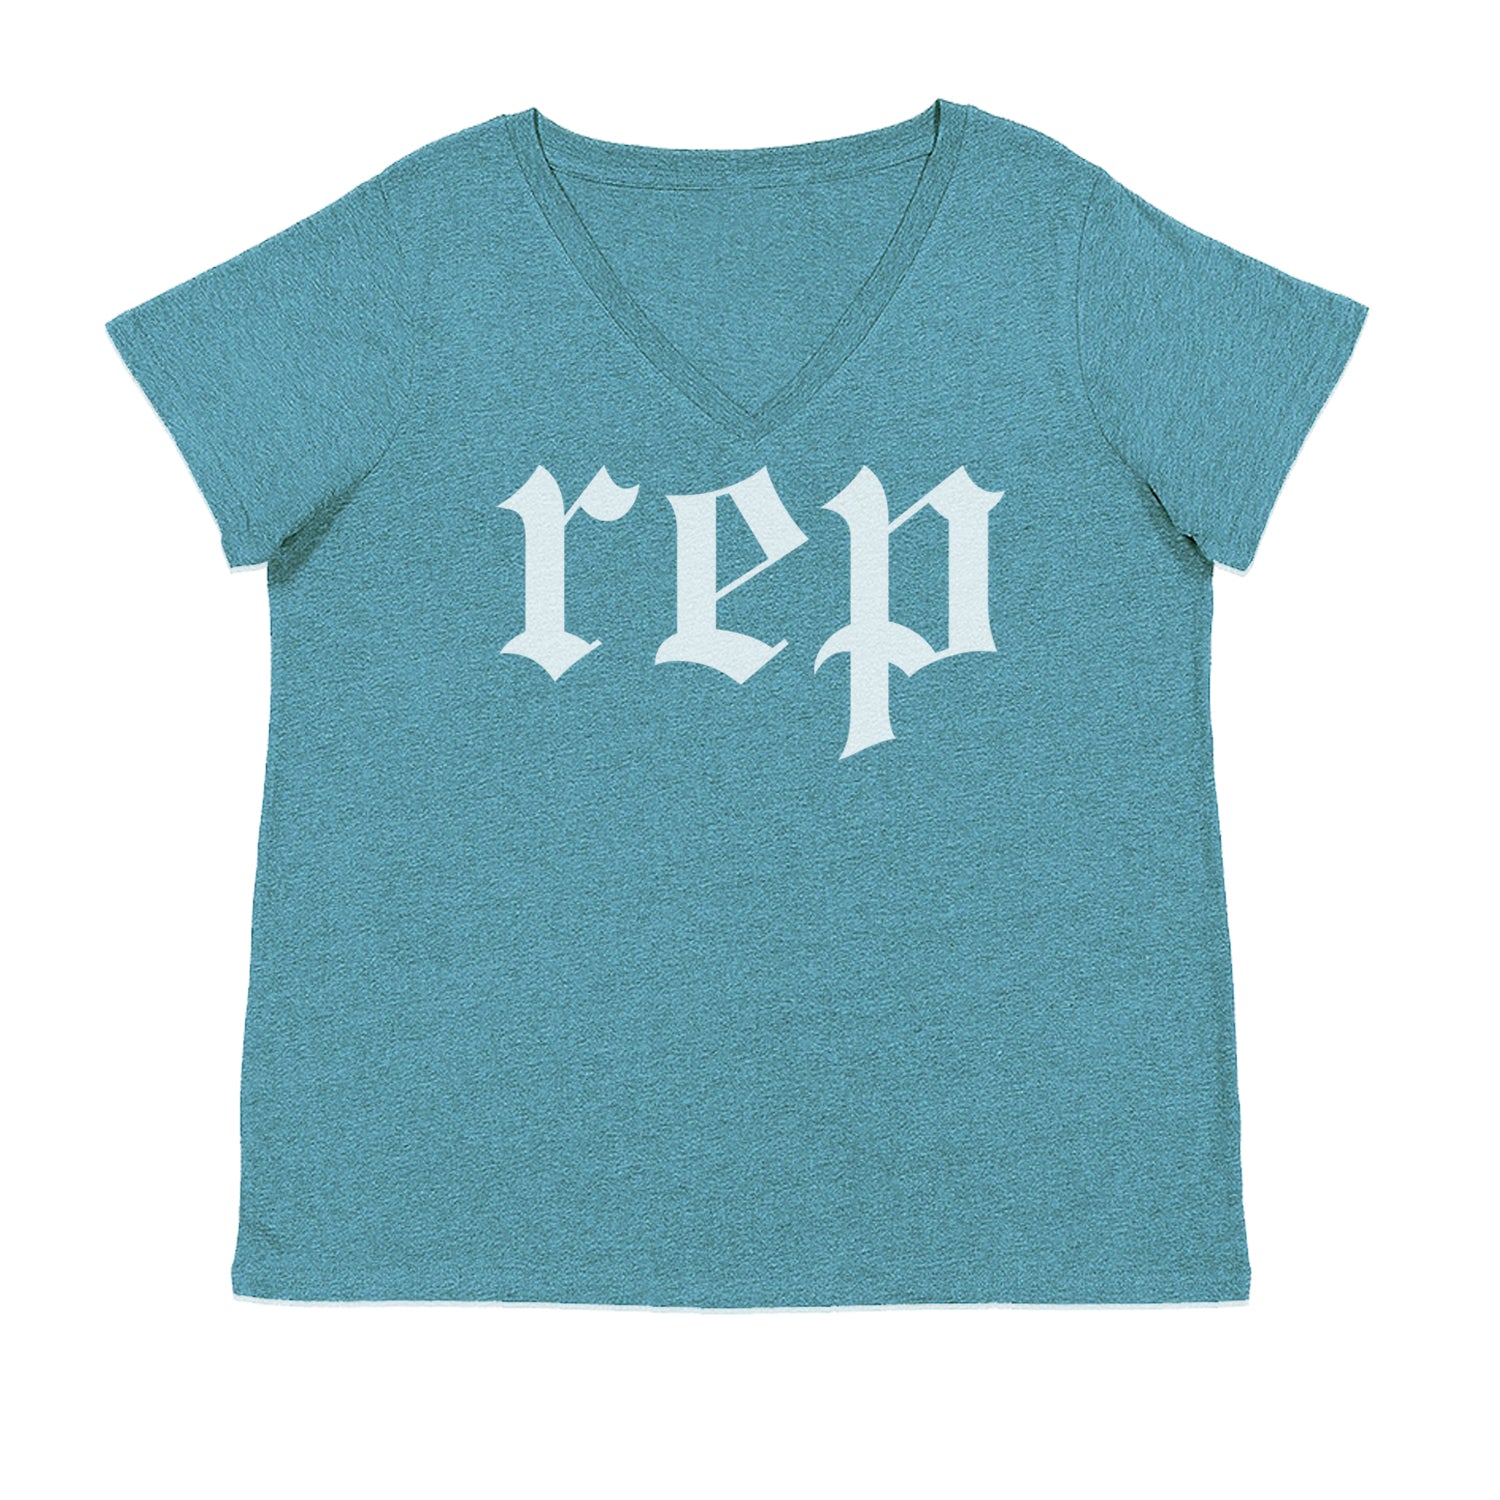 REP Reputation Eras Music Lover Gift Fan Favorite Ladies V-Neck T-shirt Surf